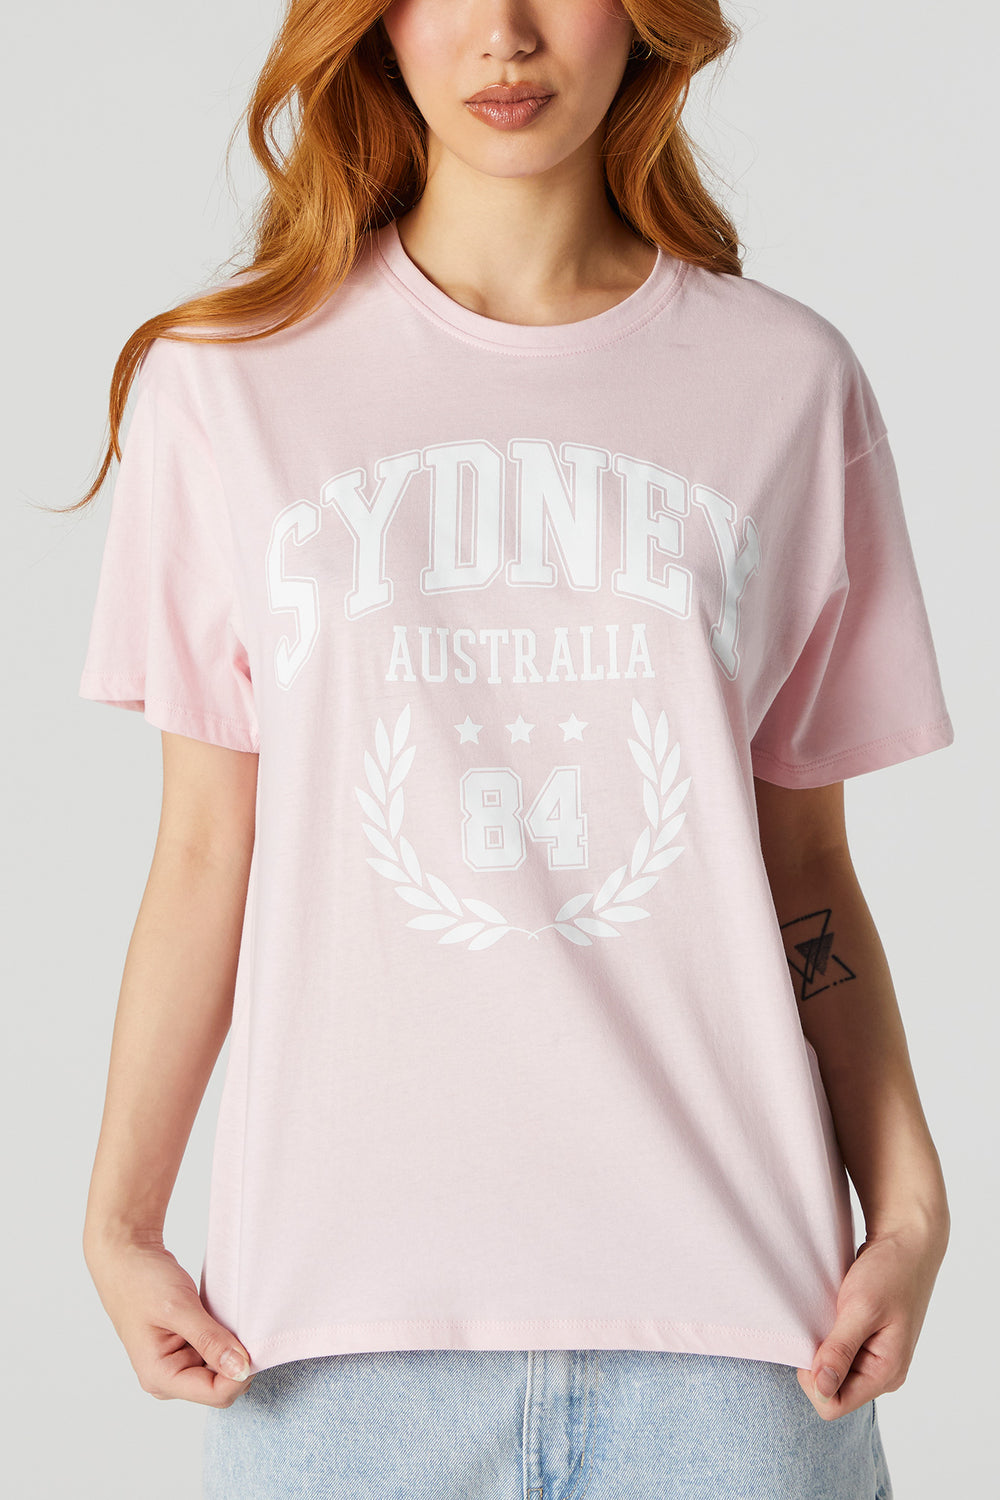 Sydney Australia Graphic Boyfriend T-Shirt Sydney Australia Graphic Boyfriend T-Shirt 1